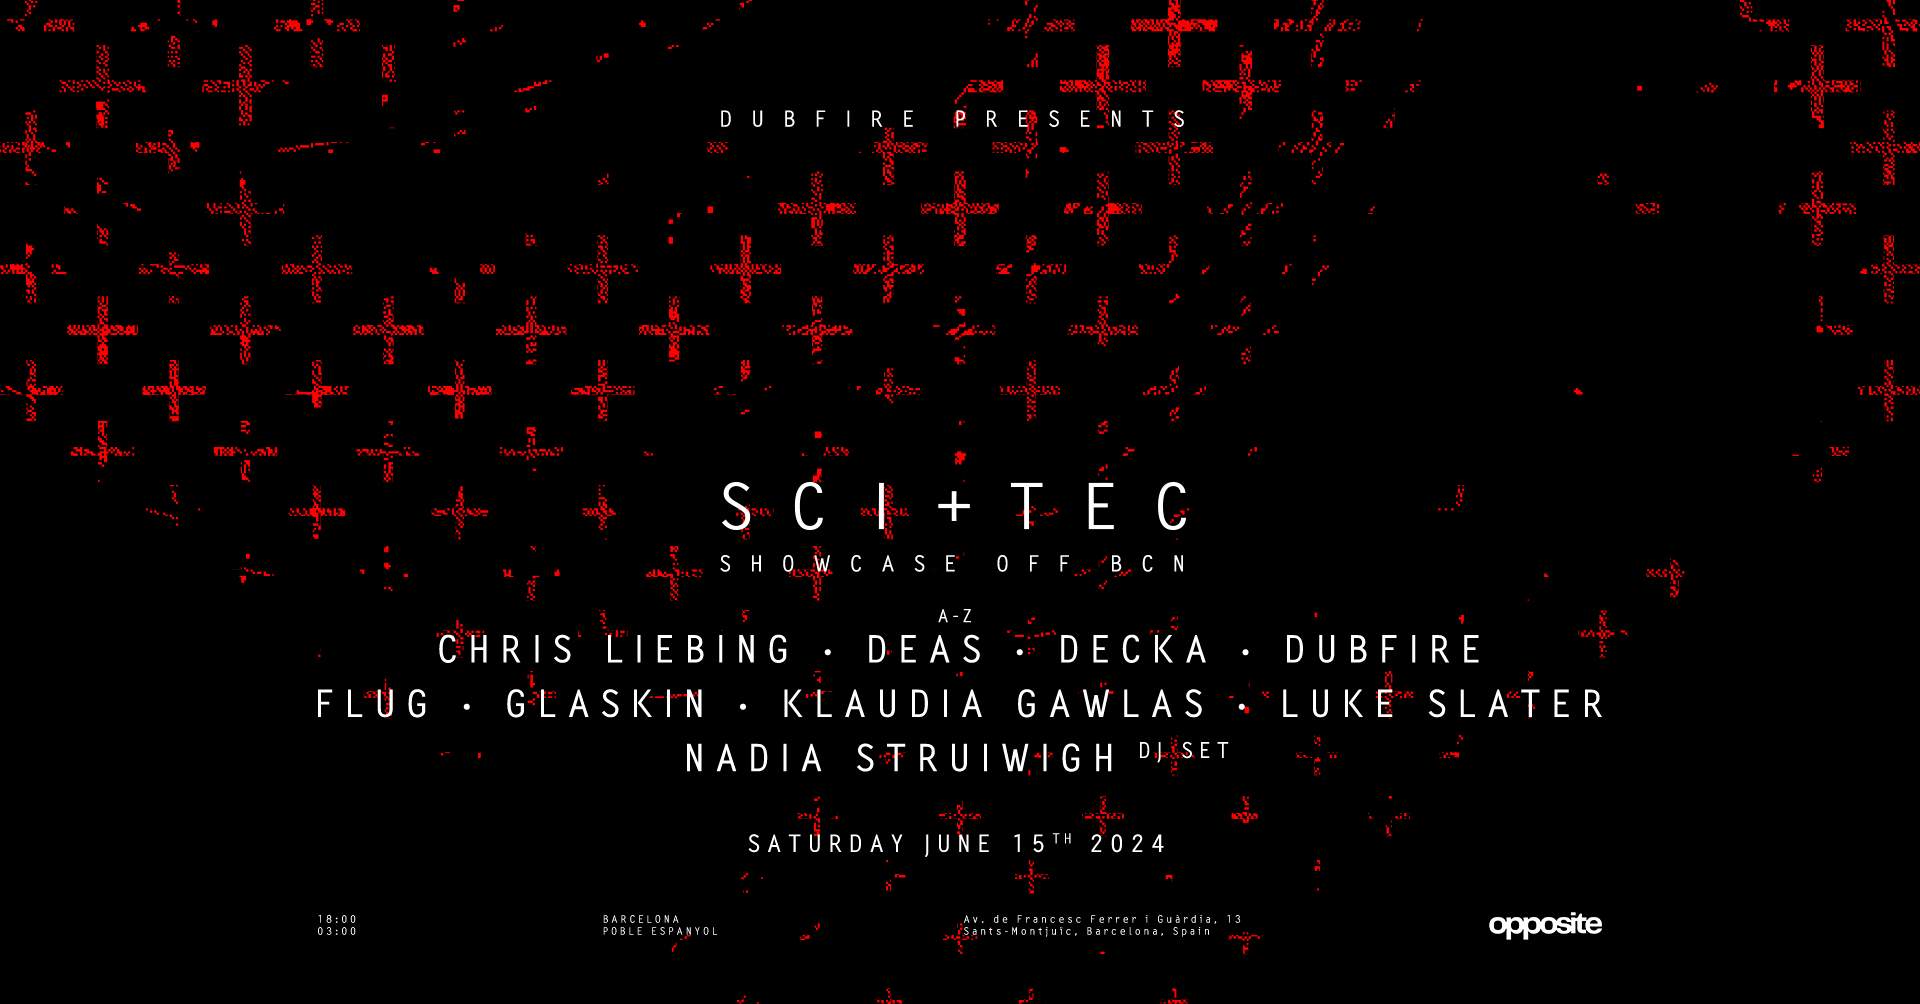 Dubfire presents SCI+TEC Showcase at Opposite - OFF BCN - Página frontal